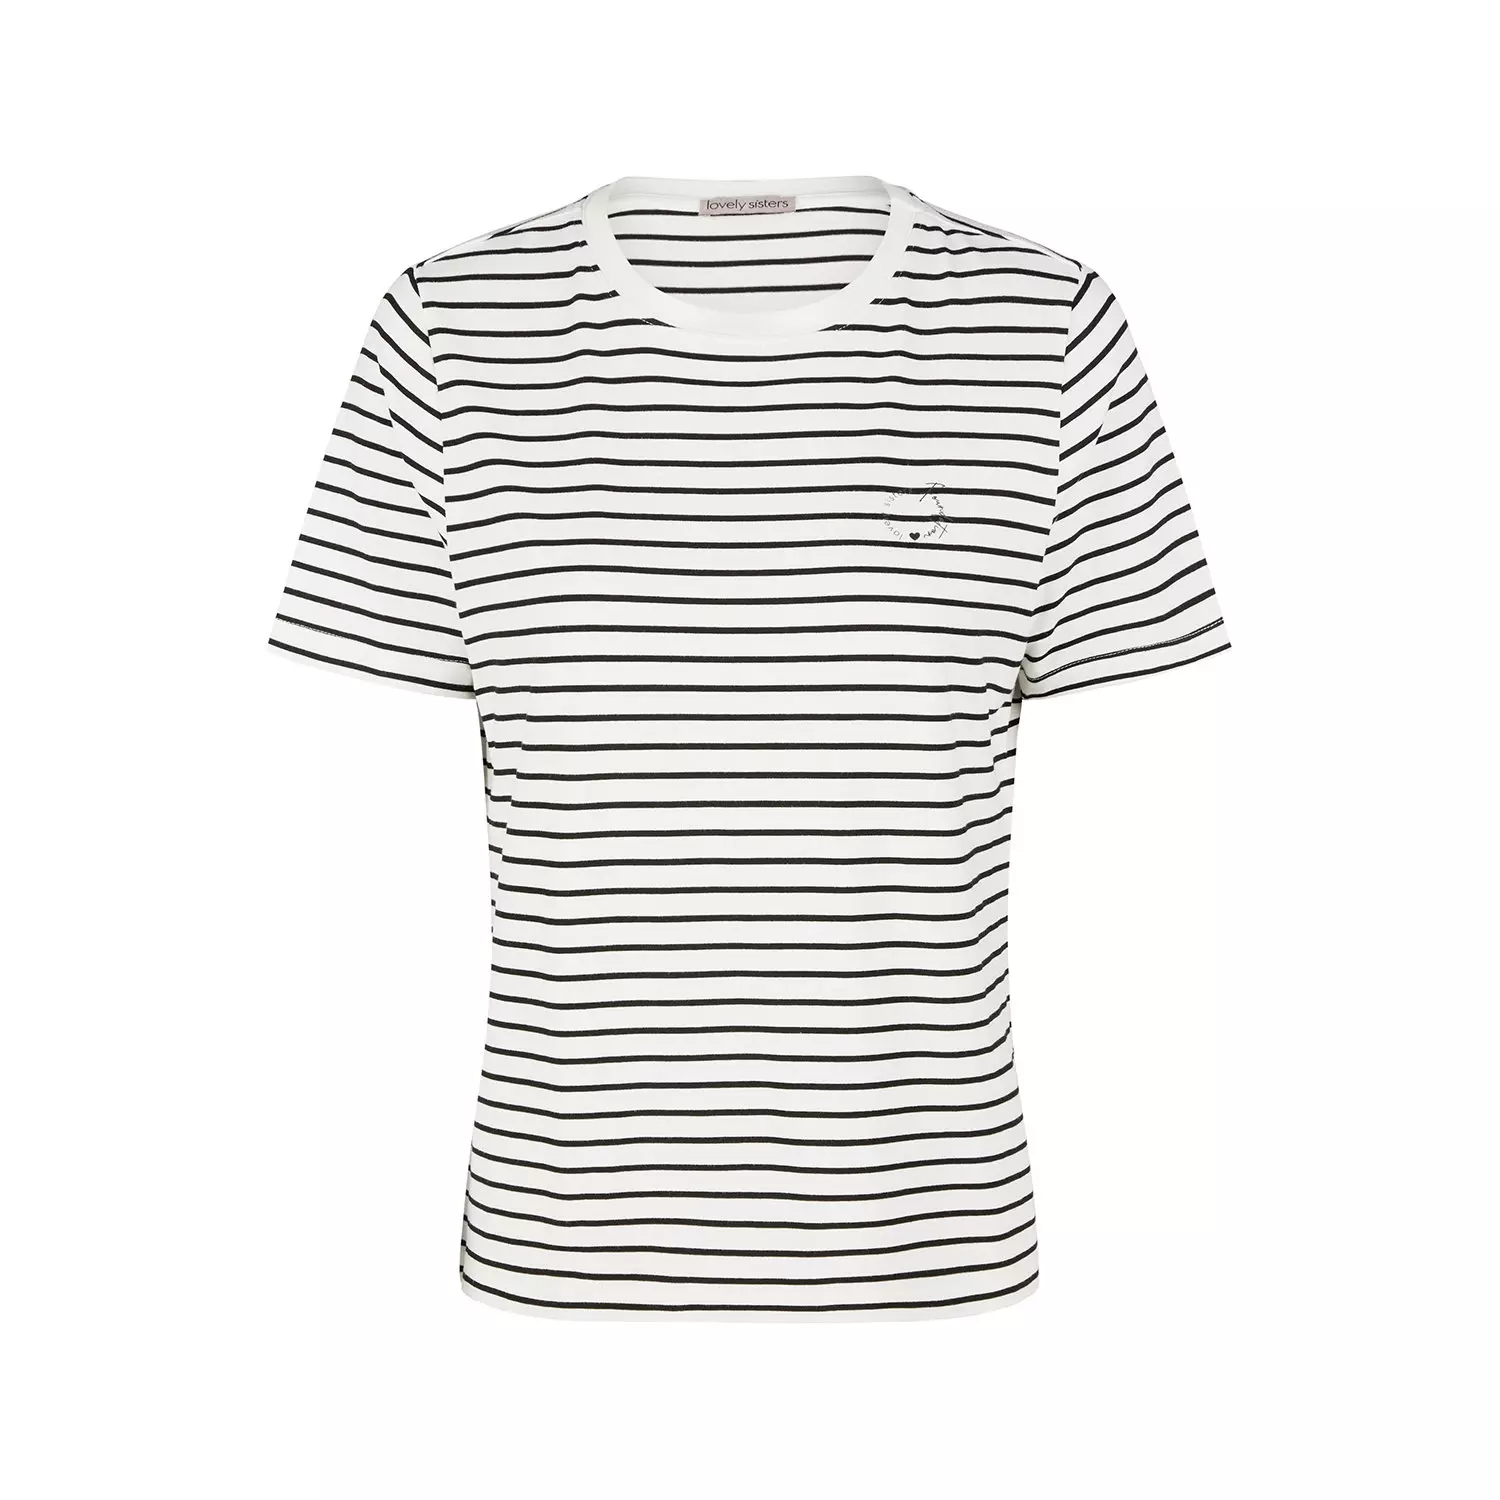 lovely sisters - T-Shirt Tanja_LS - schwarz-weiß- Streifen - Rundhalsausschnitt - Basicshirt